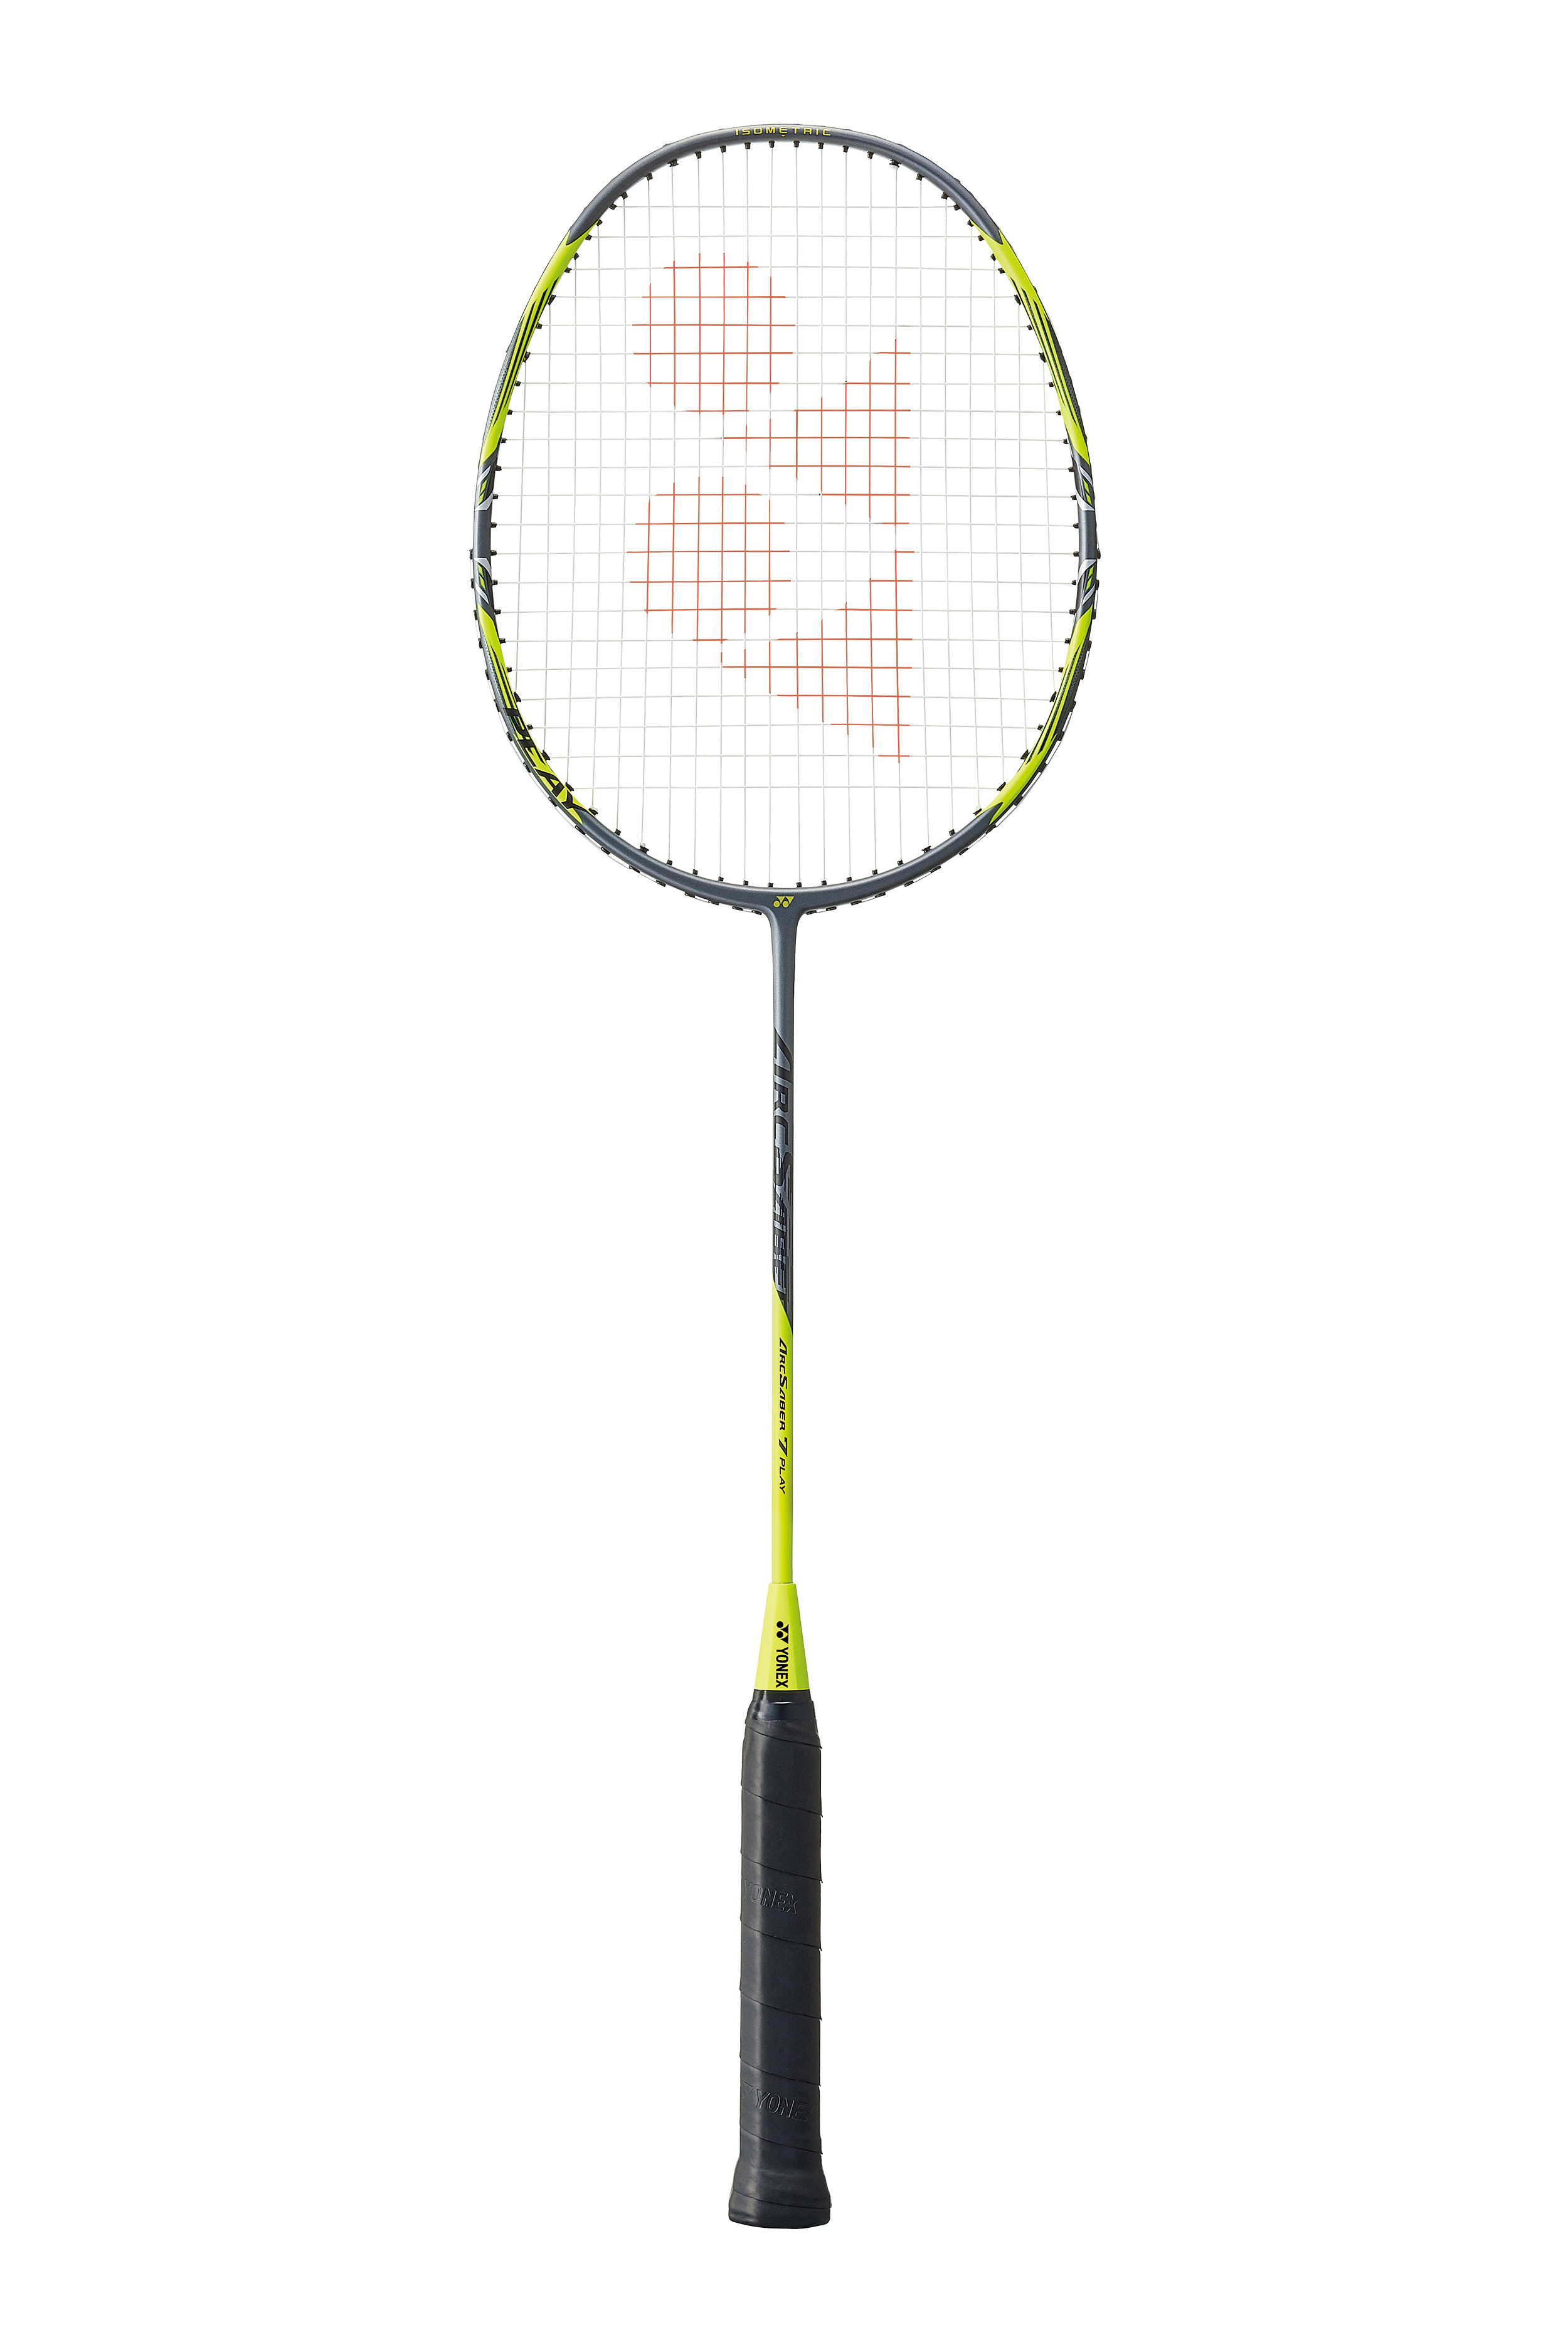 YONEX Arcsaber 7 PLAY Badminton Racquet (Gray/Yellow) 4U6 Strung ARC7-PL